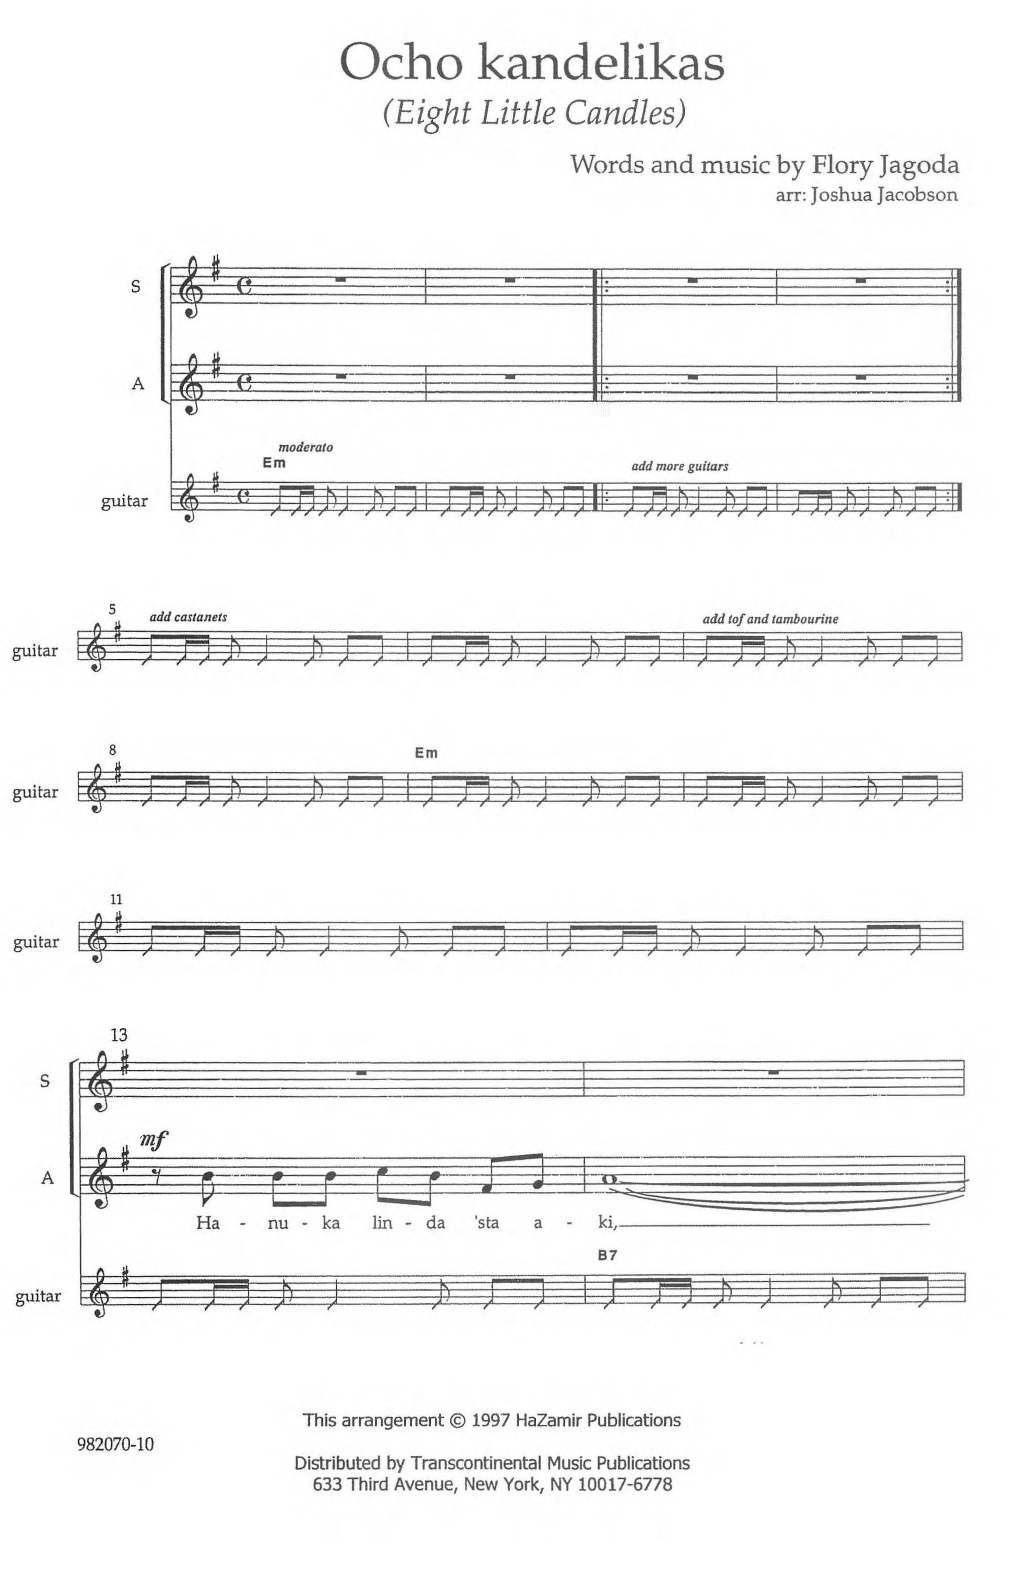 Flory Jagoda Ocho Kandelikas (arr. Joshua Jacobson) Sheet Music Notes & Chords for Choir - Download or Print PDF